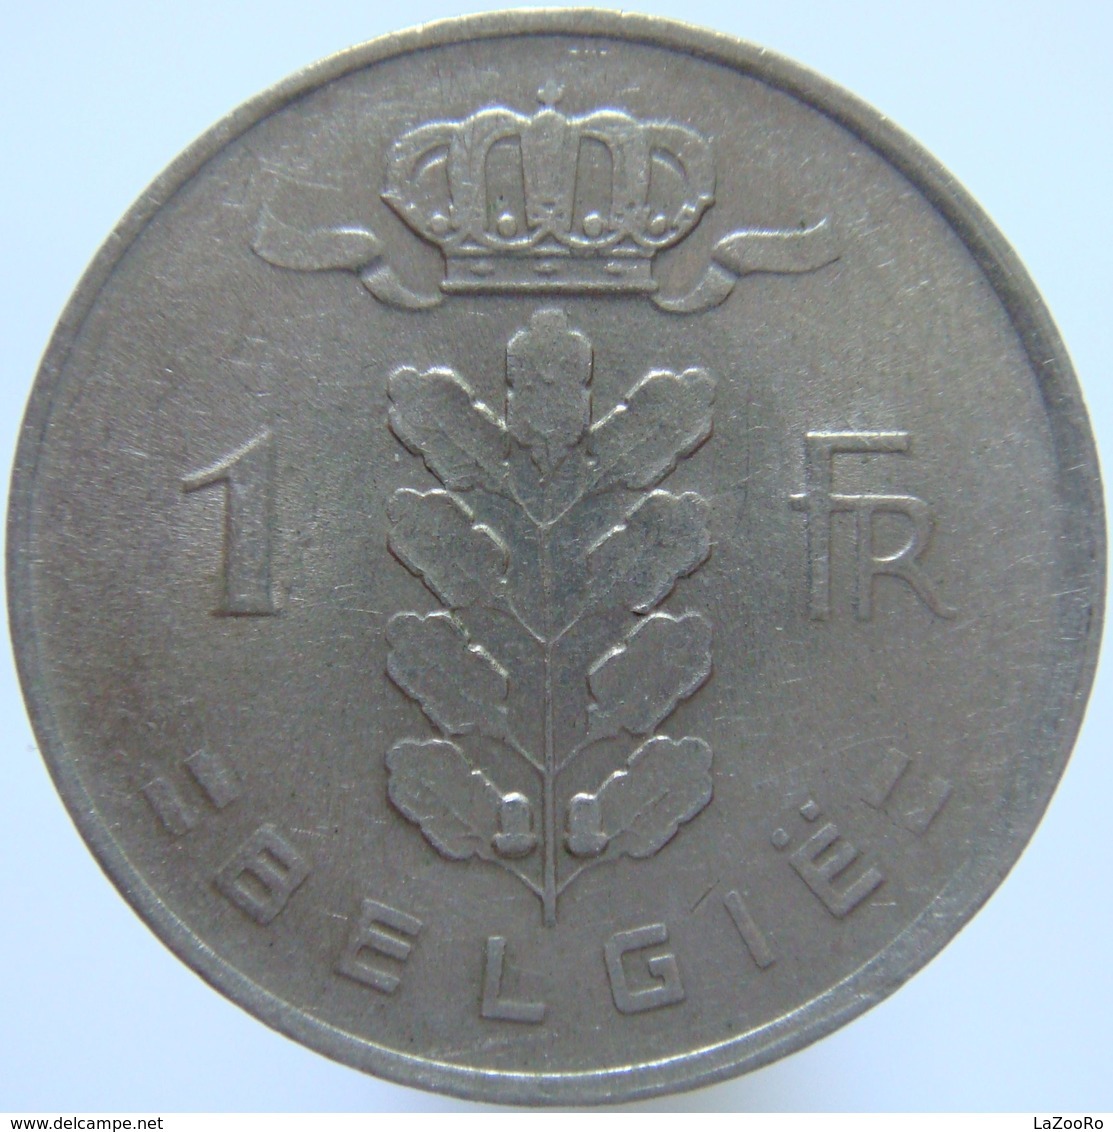 LaZooRo: Belgium 1 Franc 1951 XF / UNC - 1 Franc